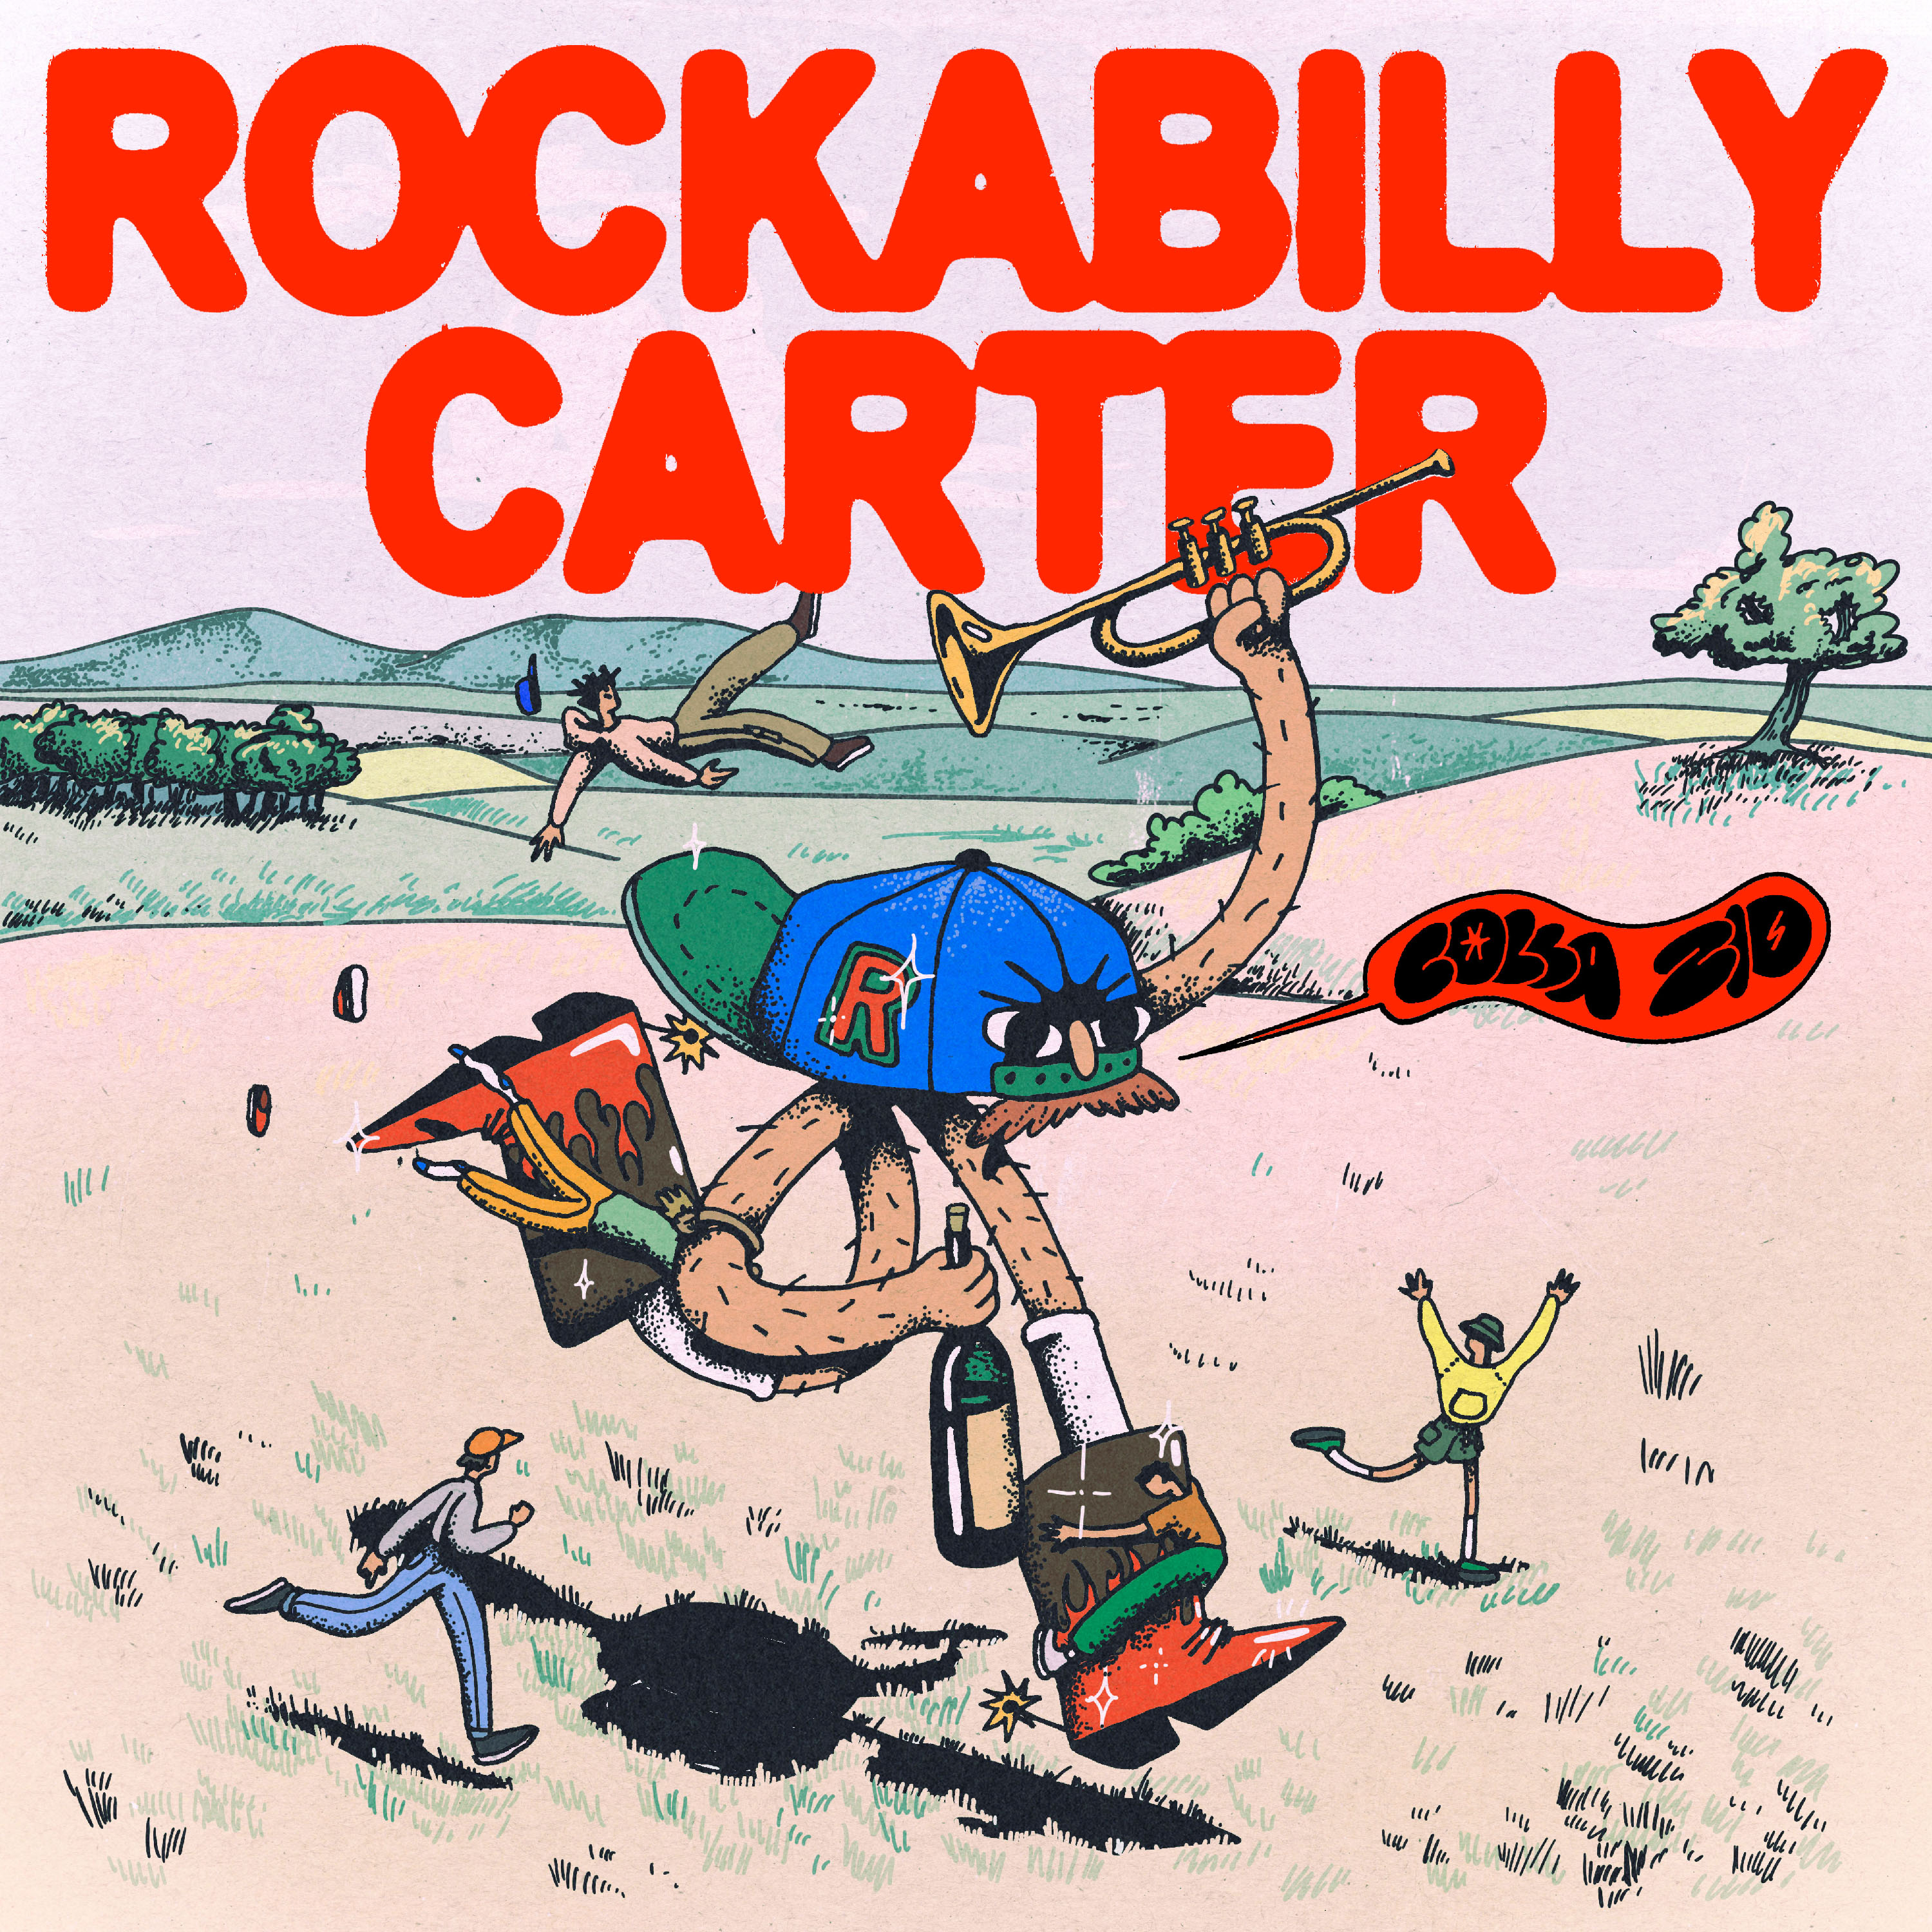 Rockabilly Carter cover Colla Zio